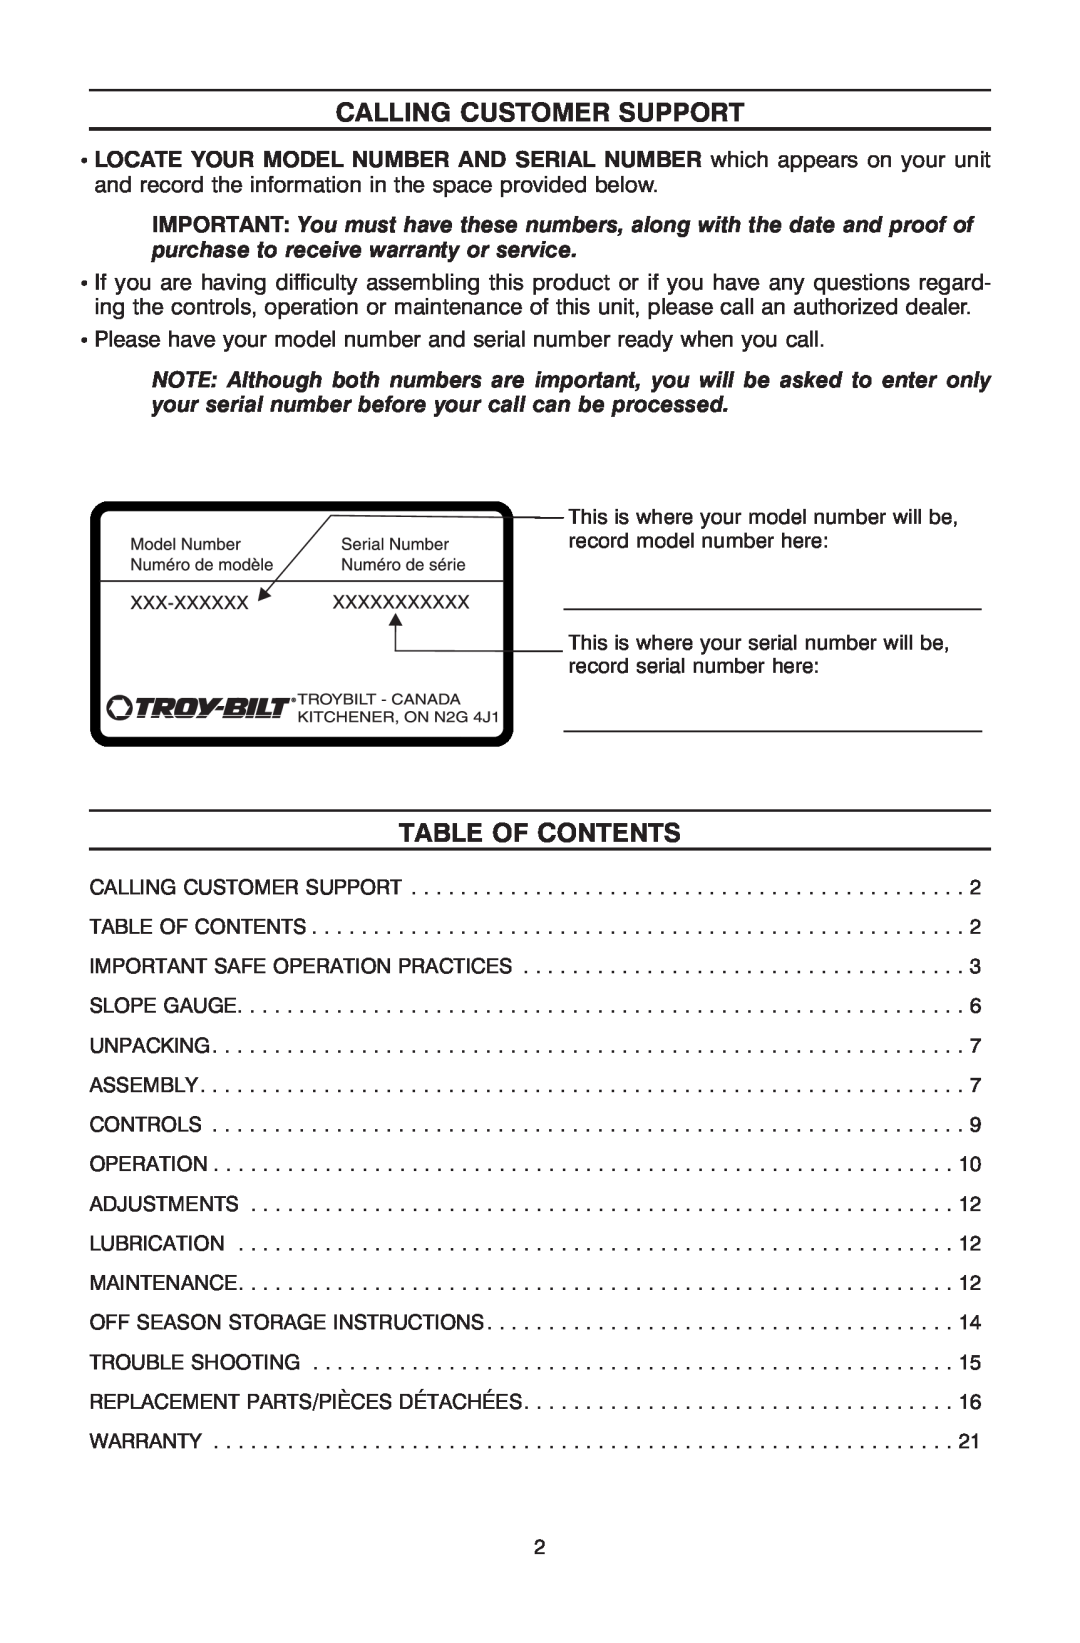 Troy-Bilt OG-4605 owner manual Calling Customer Support, Table Of Contents 